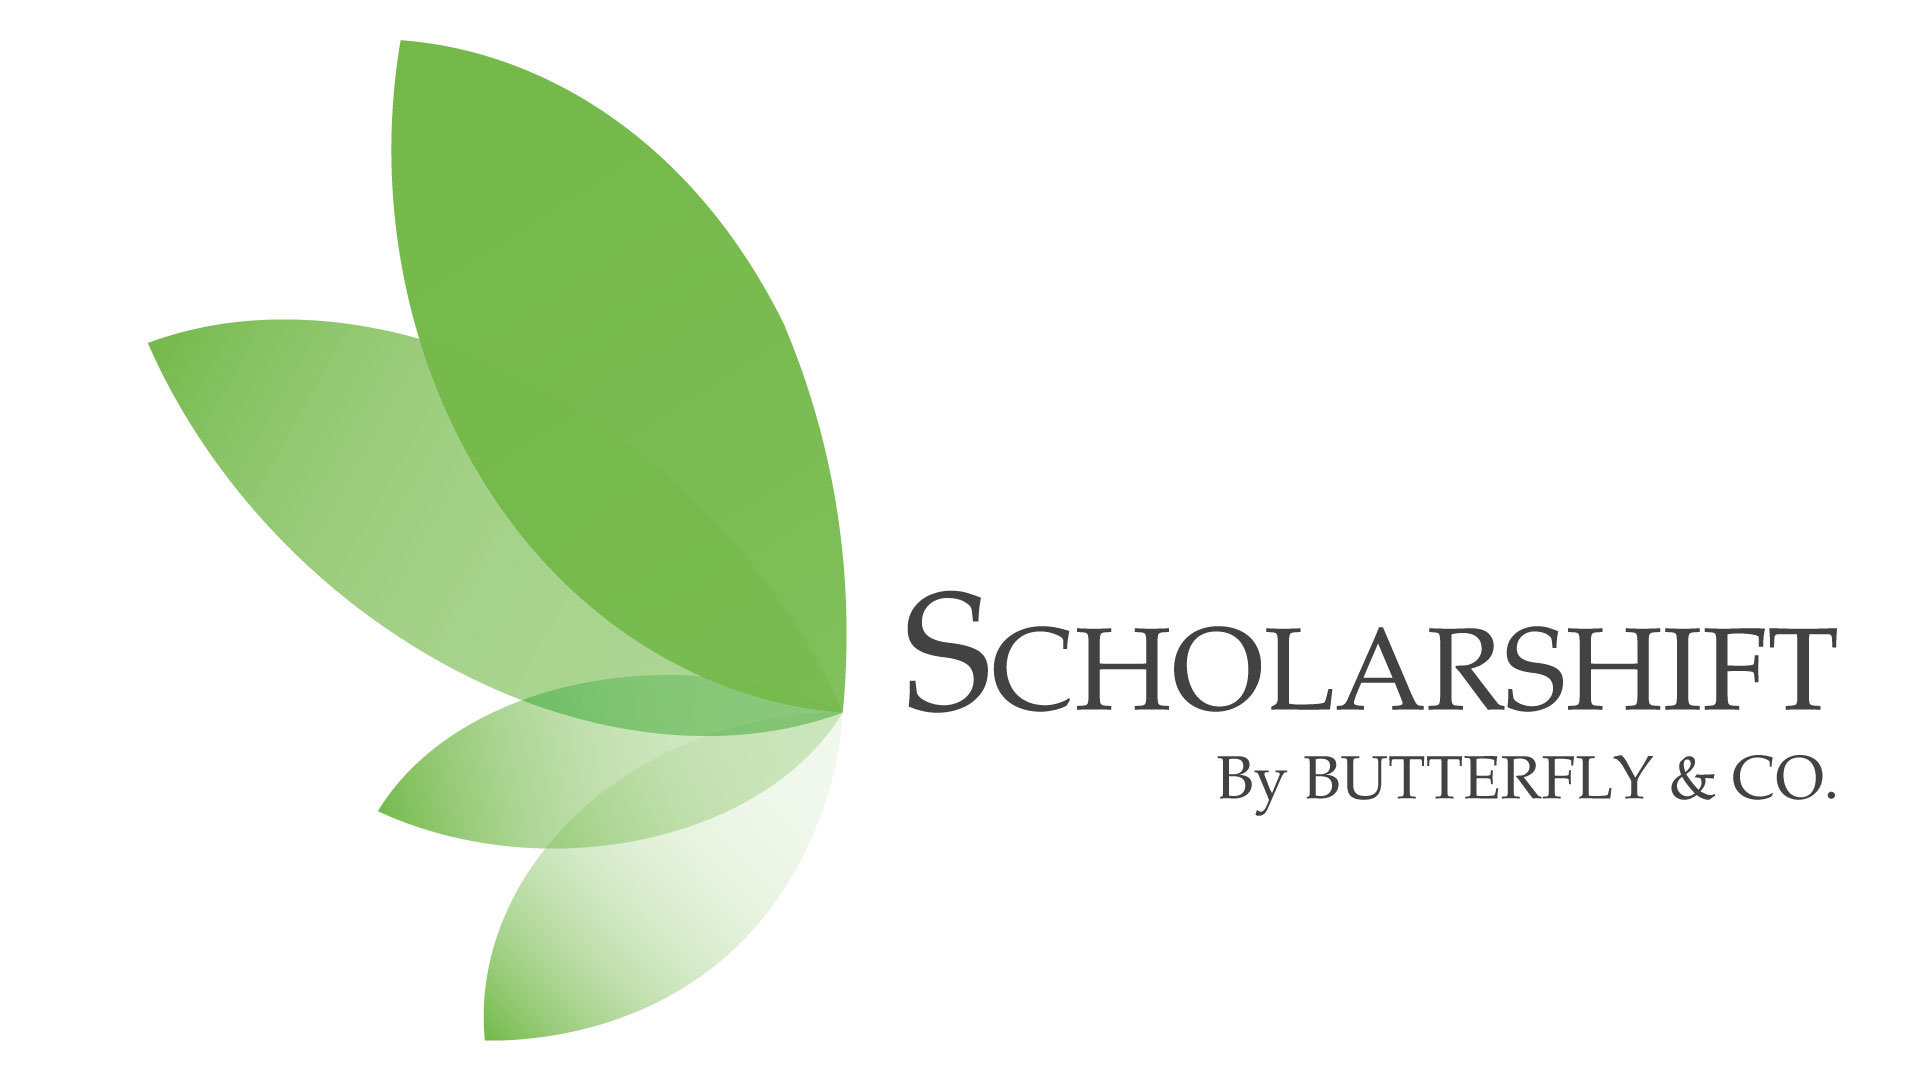 Buttefly&Co - Logo Scholarshift CSR Fund